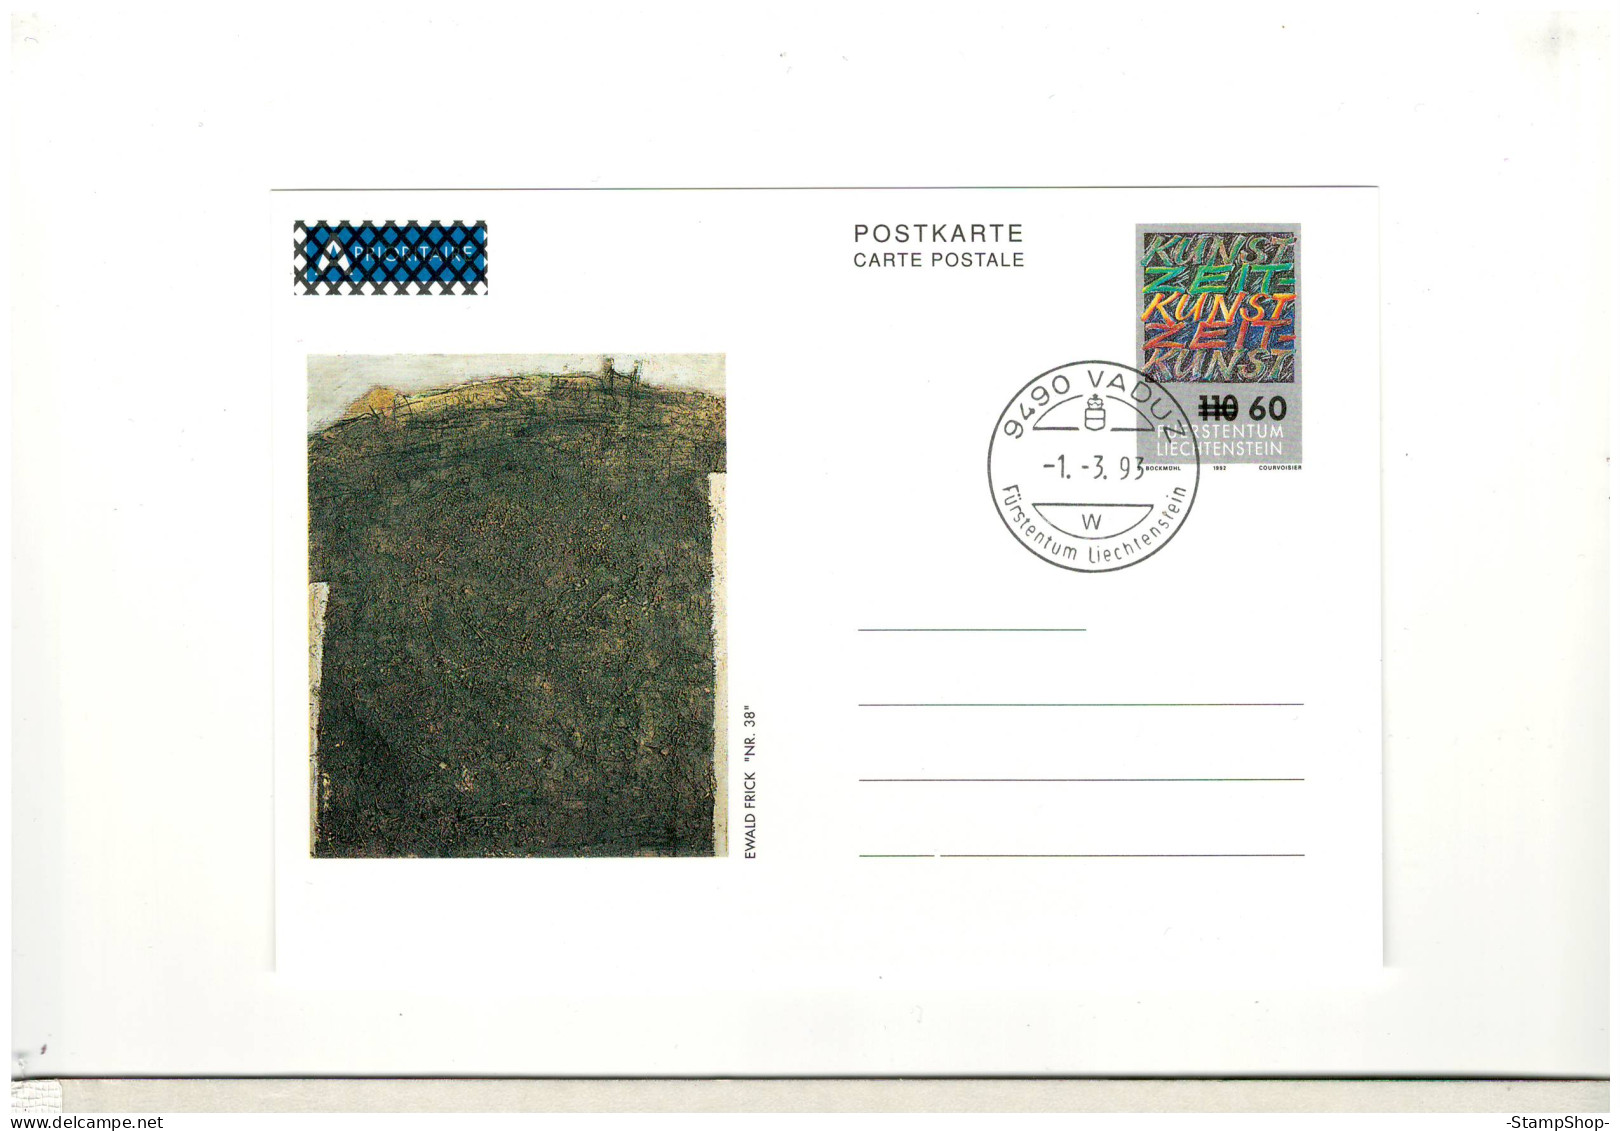 1993 Liechtenstein - Vaduz Postmark, Art, Overprint With Lower Value - Postcard - BX2043 - Lettres & Documents